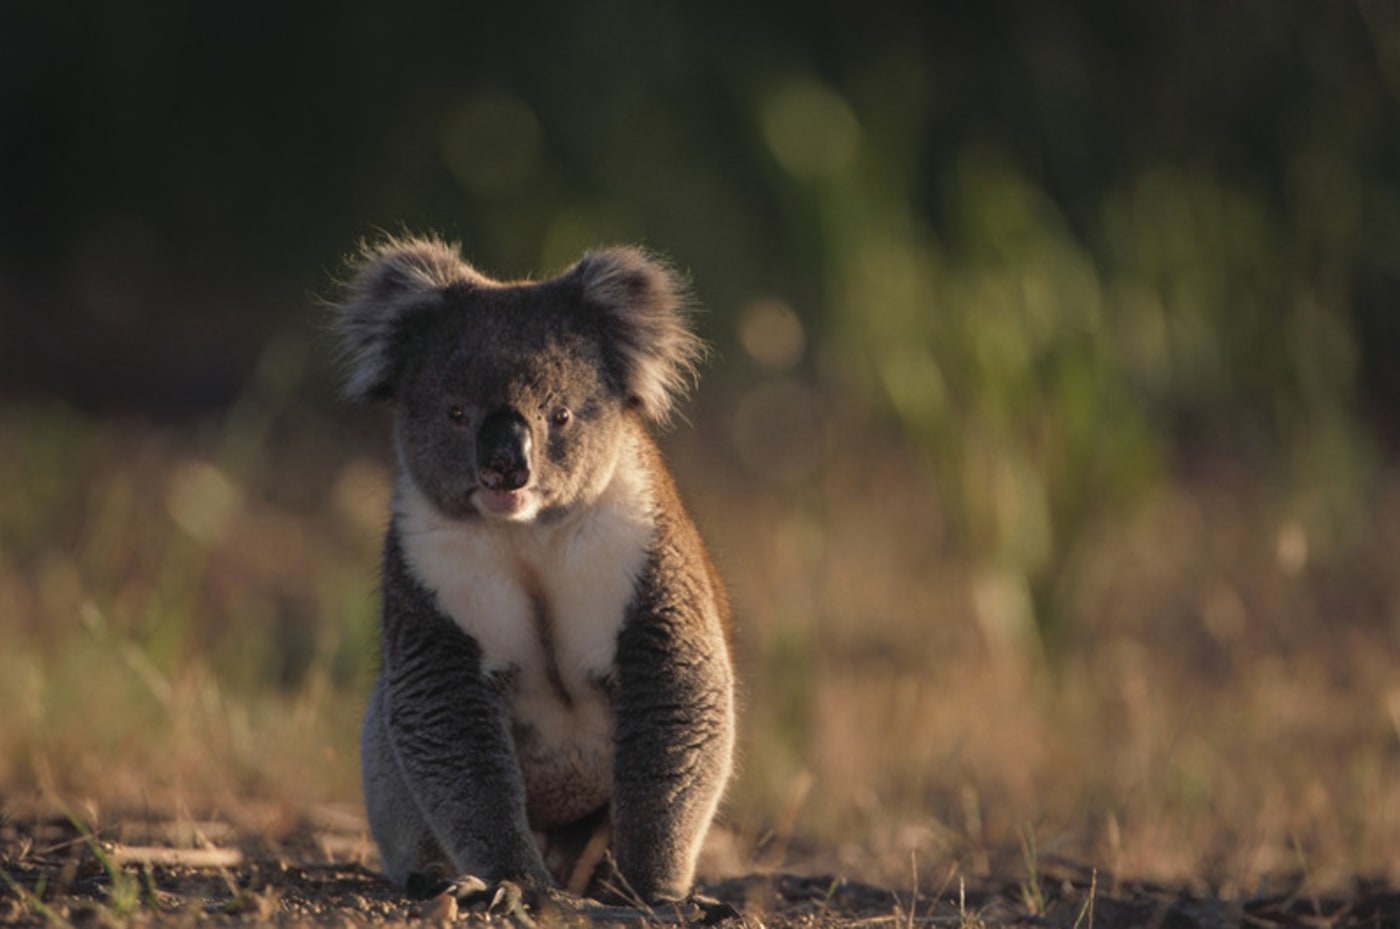 Wild koala (Phascolarctos cinereus) sitting on the ground, Kangaroo Island, South Australia.